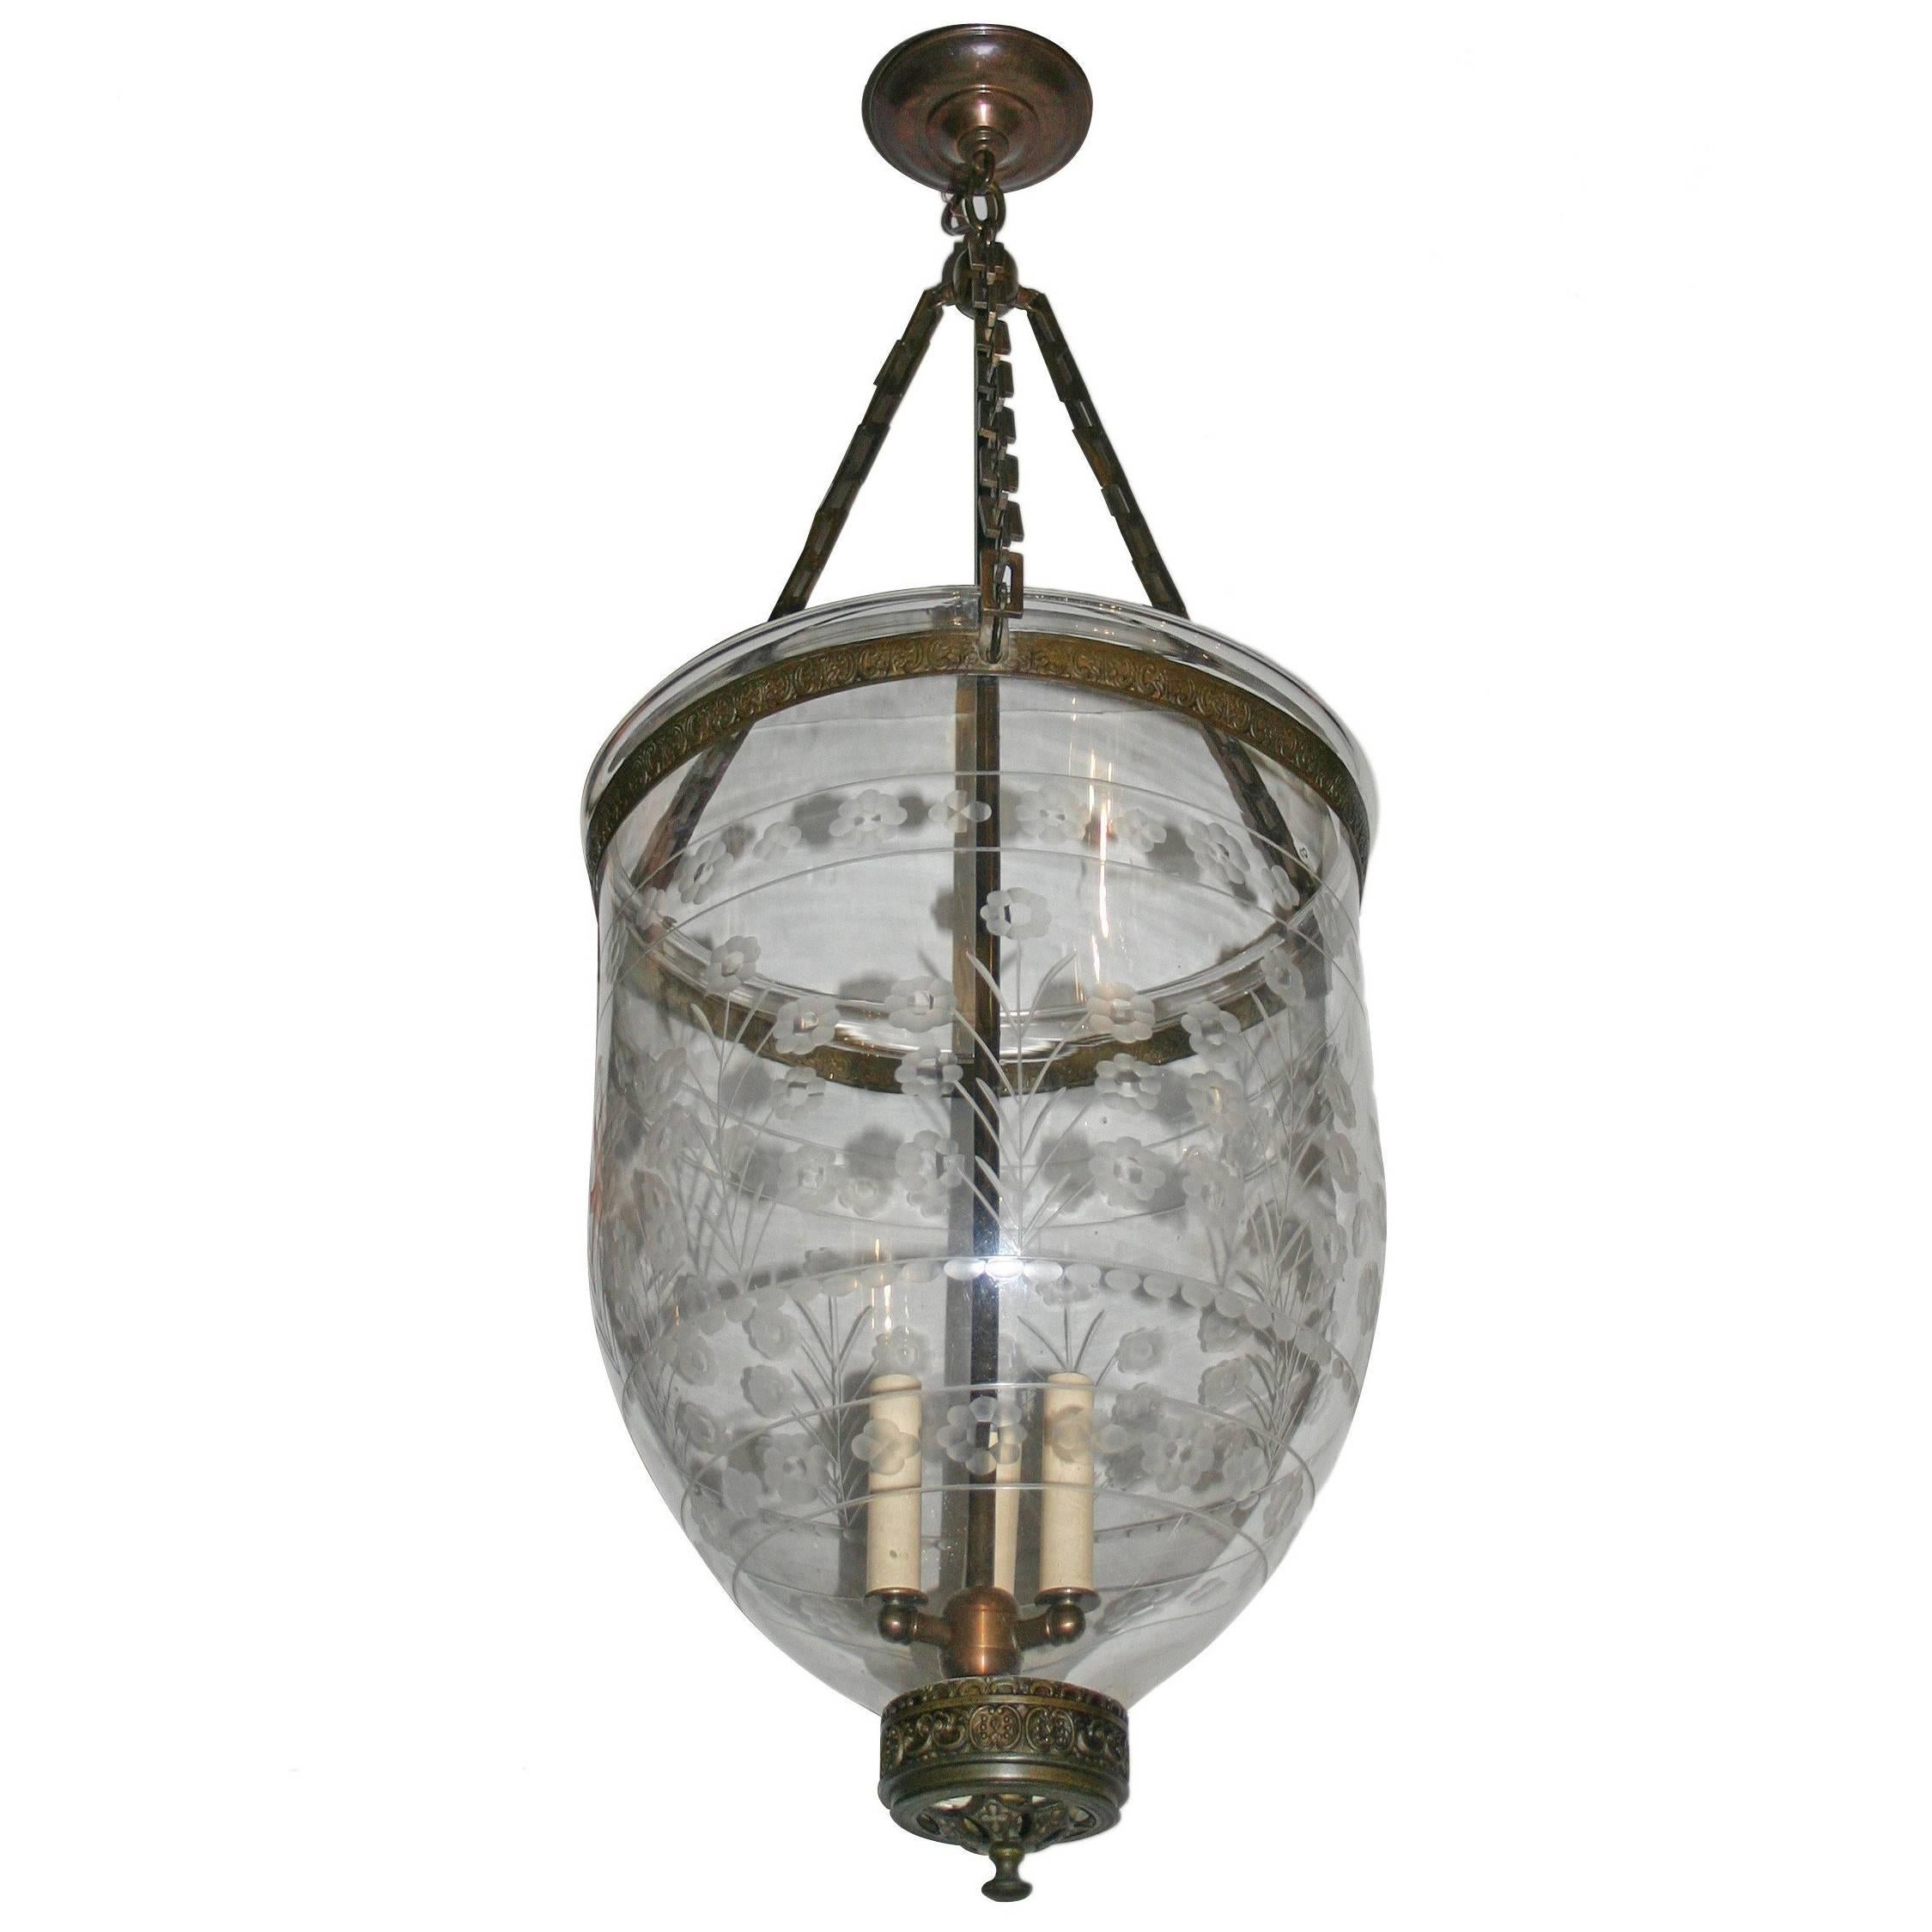 Large Italian Etched Glass Lantern